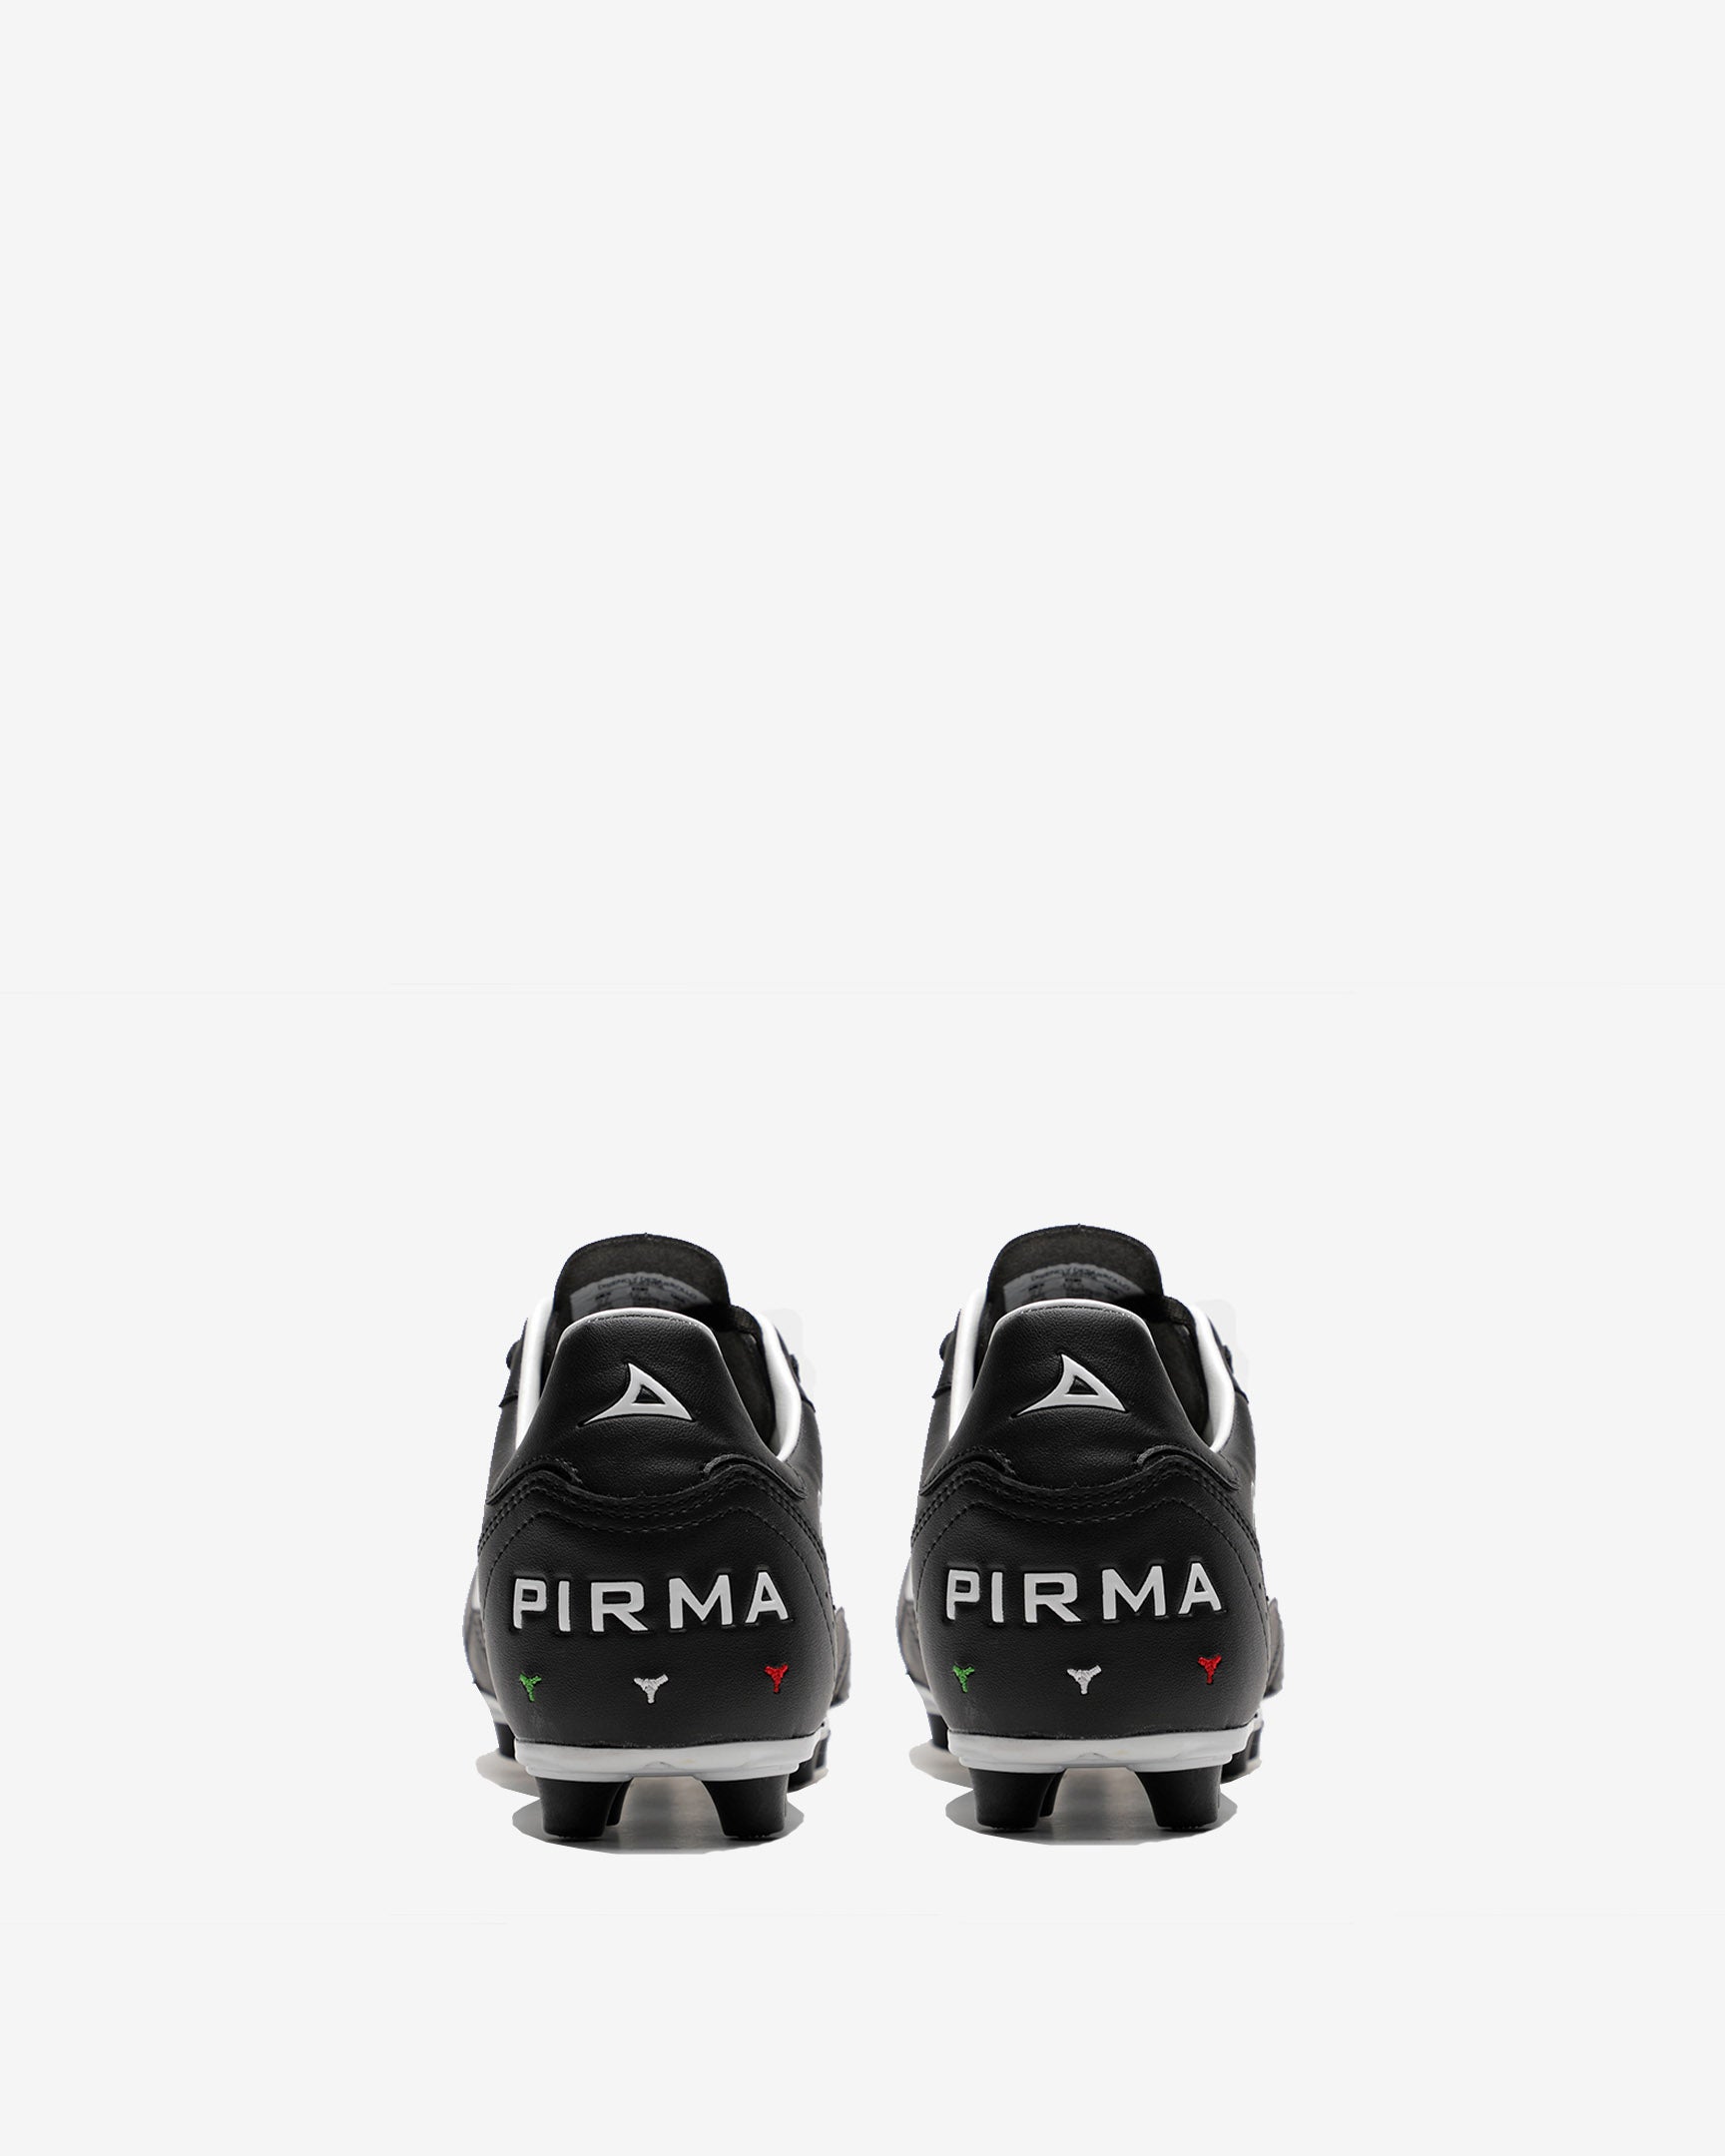  Men's Soccer Cleats Supreme X FG Pirma Color White/Silver |  Shoes